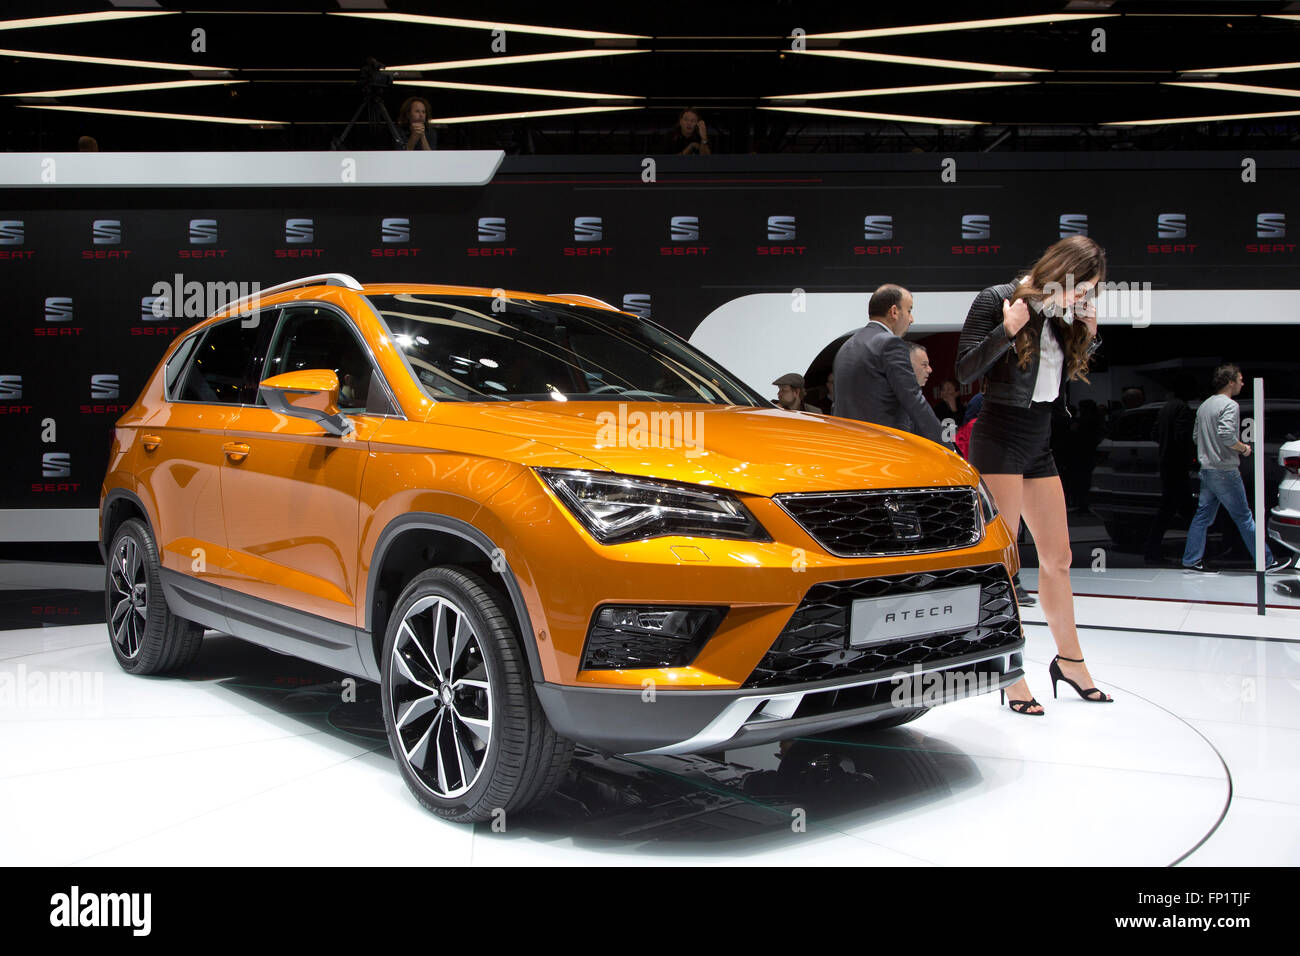 La famille SUV crossover Ateca siège au Salon de Genève 2016 Photo Stock -  Alamy